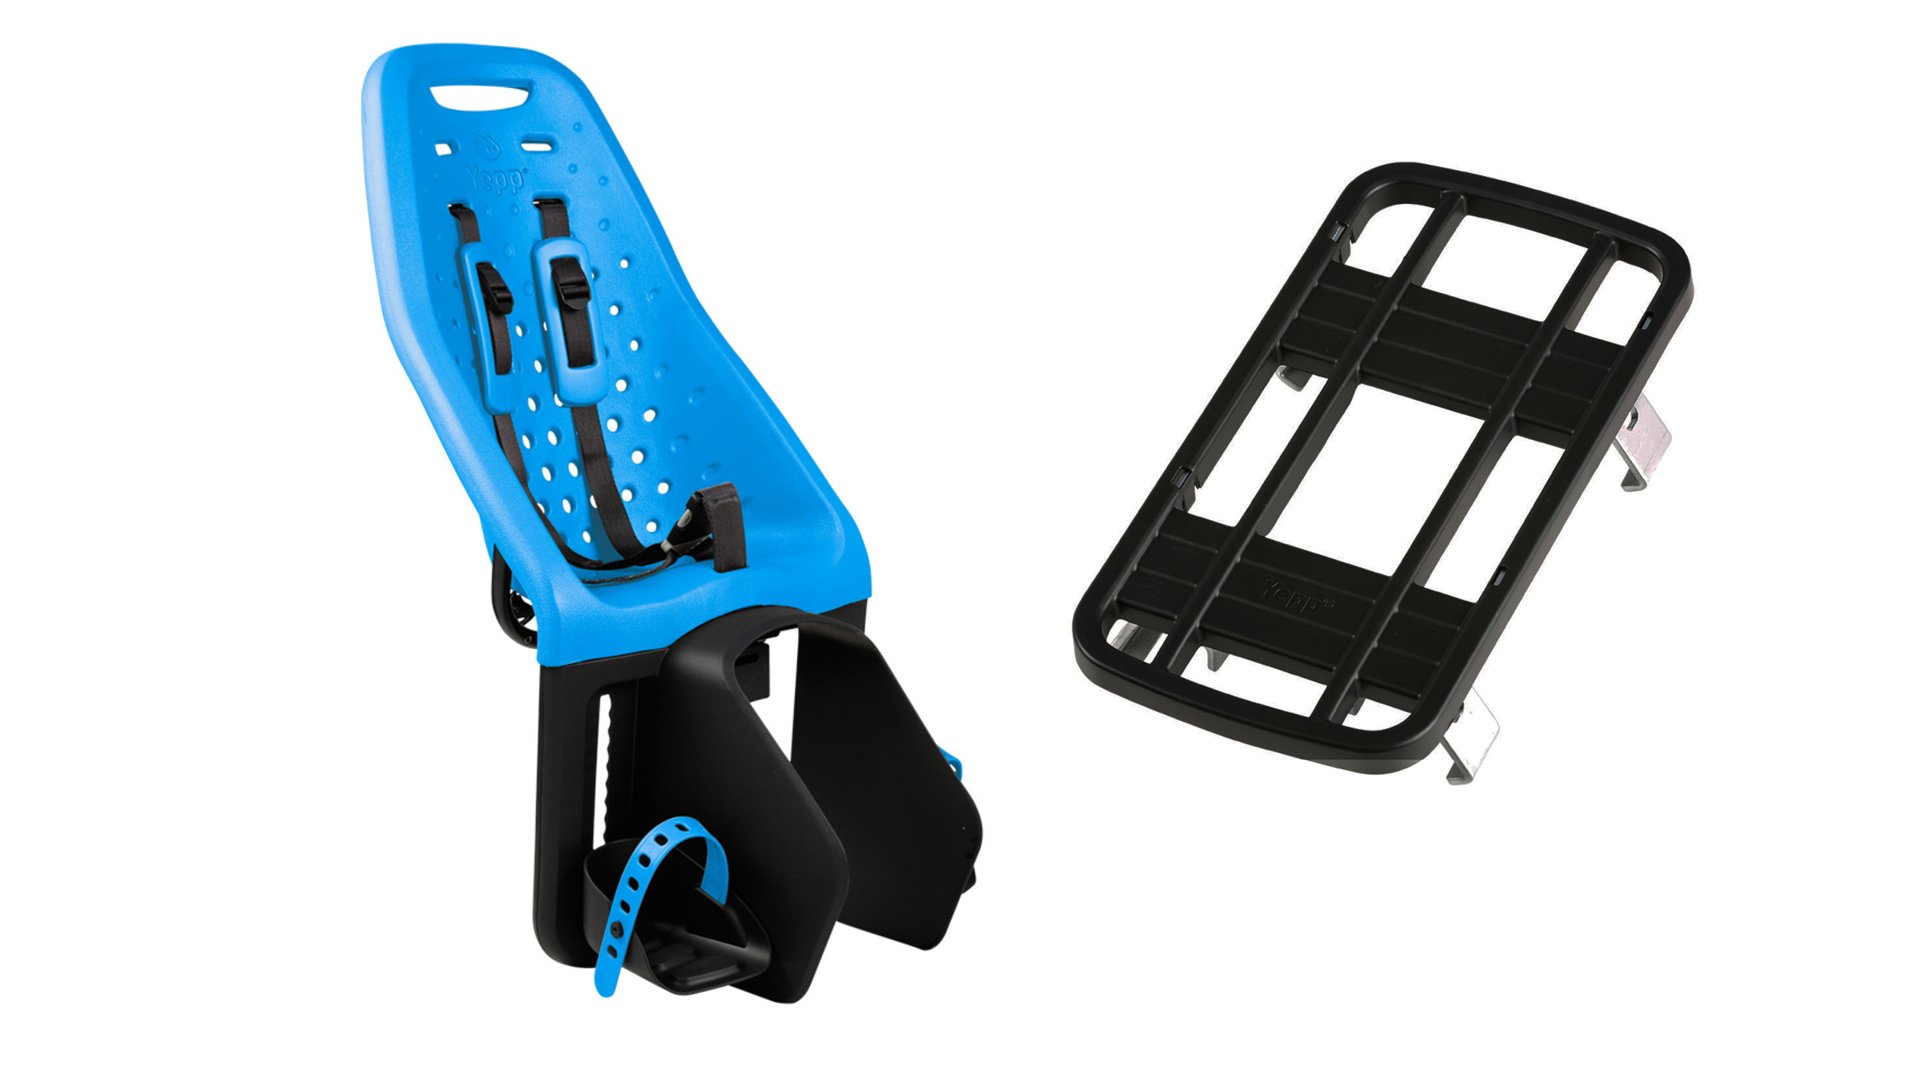 Siège enfant Yepp Maxi bleu pour porte-bagage long Yepp avec adaptateur EasyFit